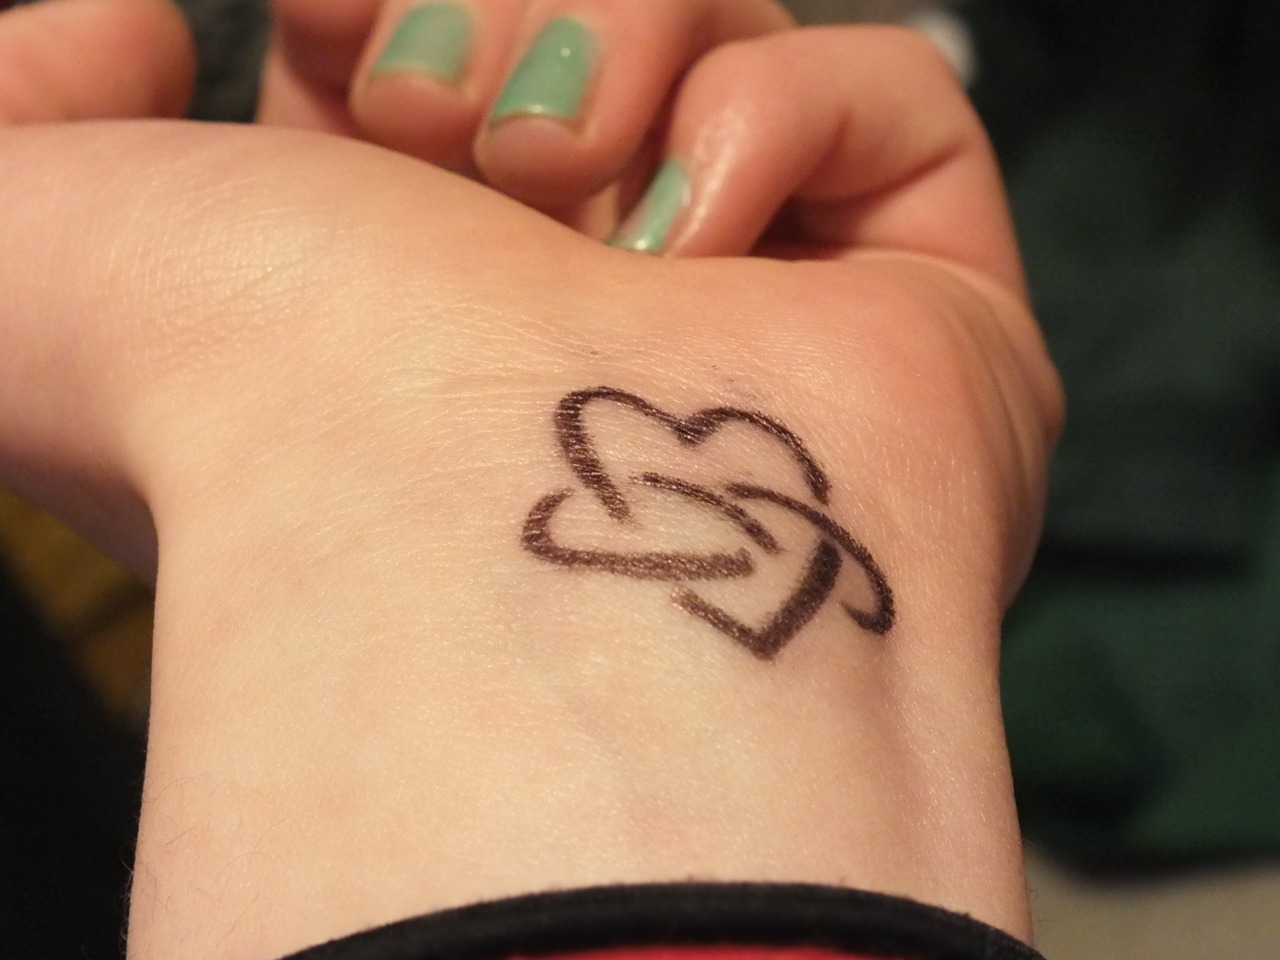 Female Wrist Tattoo – Inner Wrist Tattoo Design with Heart